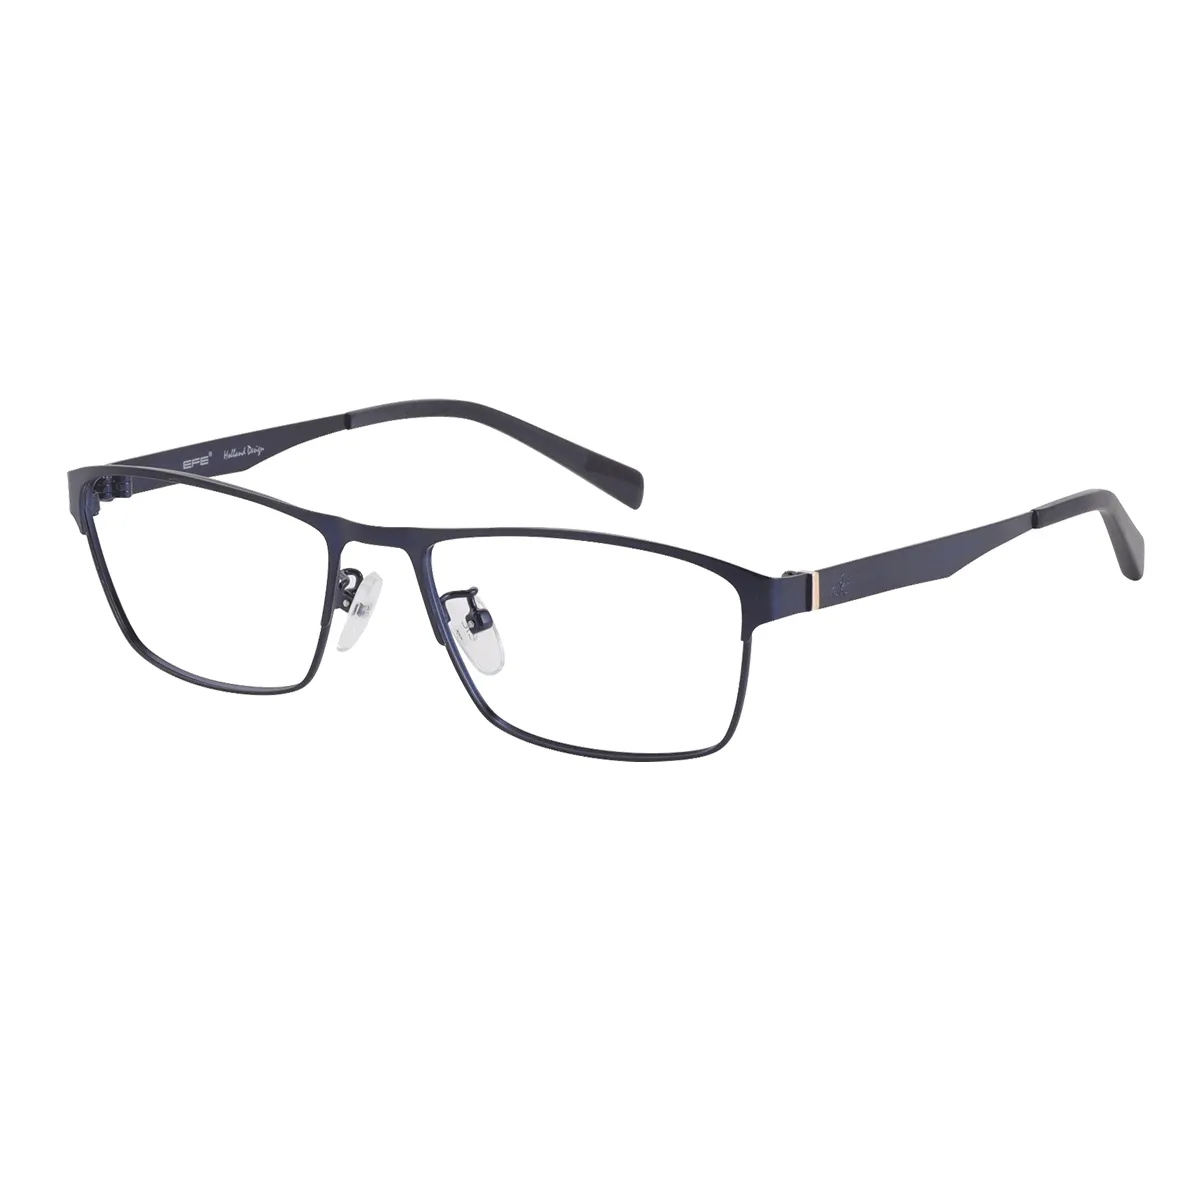 Dexter - Browline Blue Glasses for Men